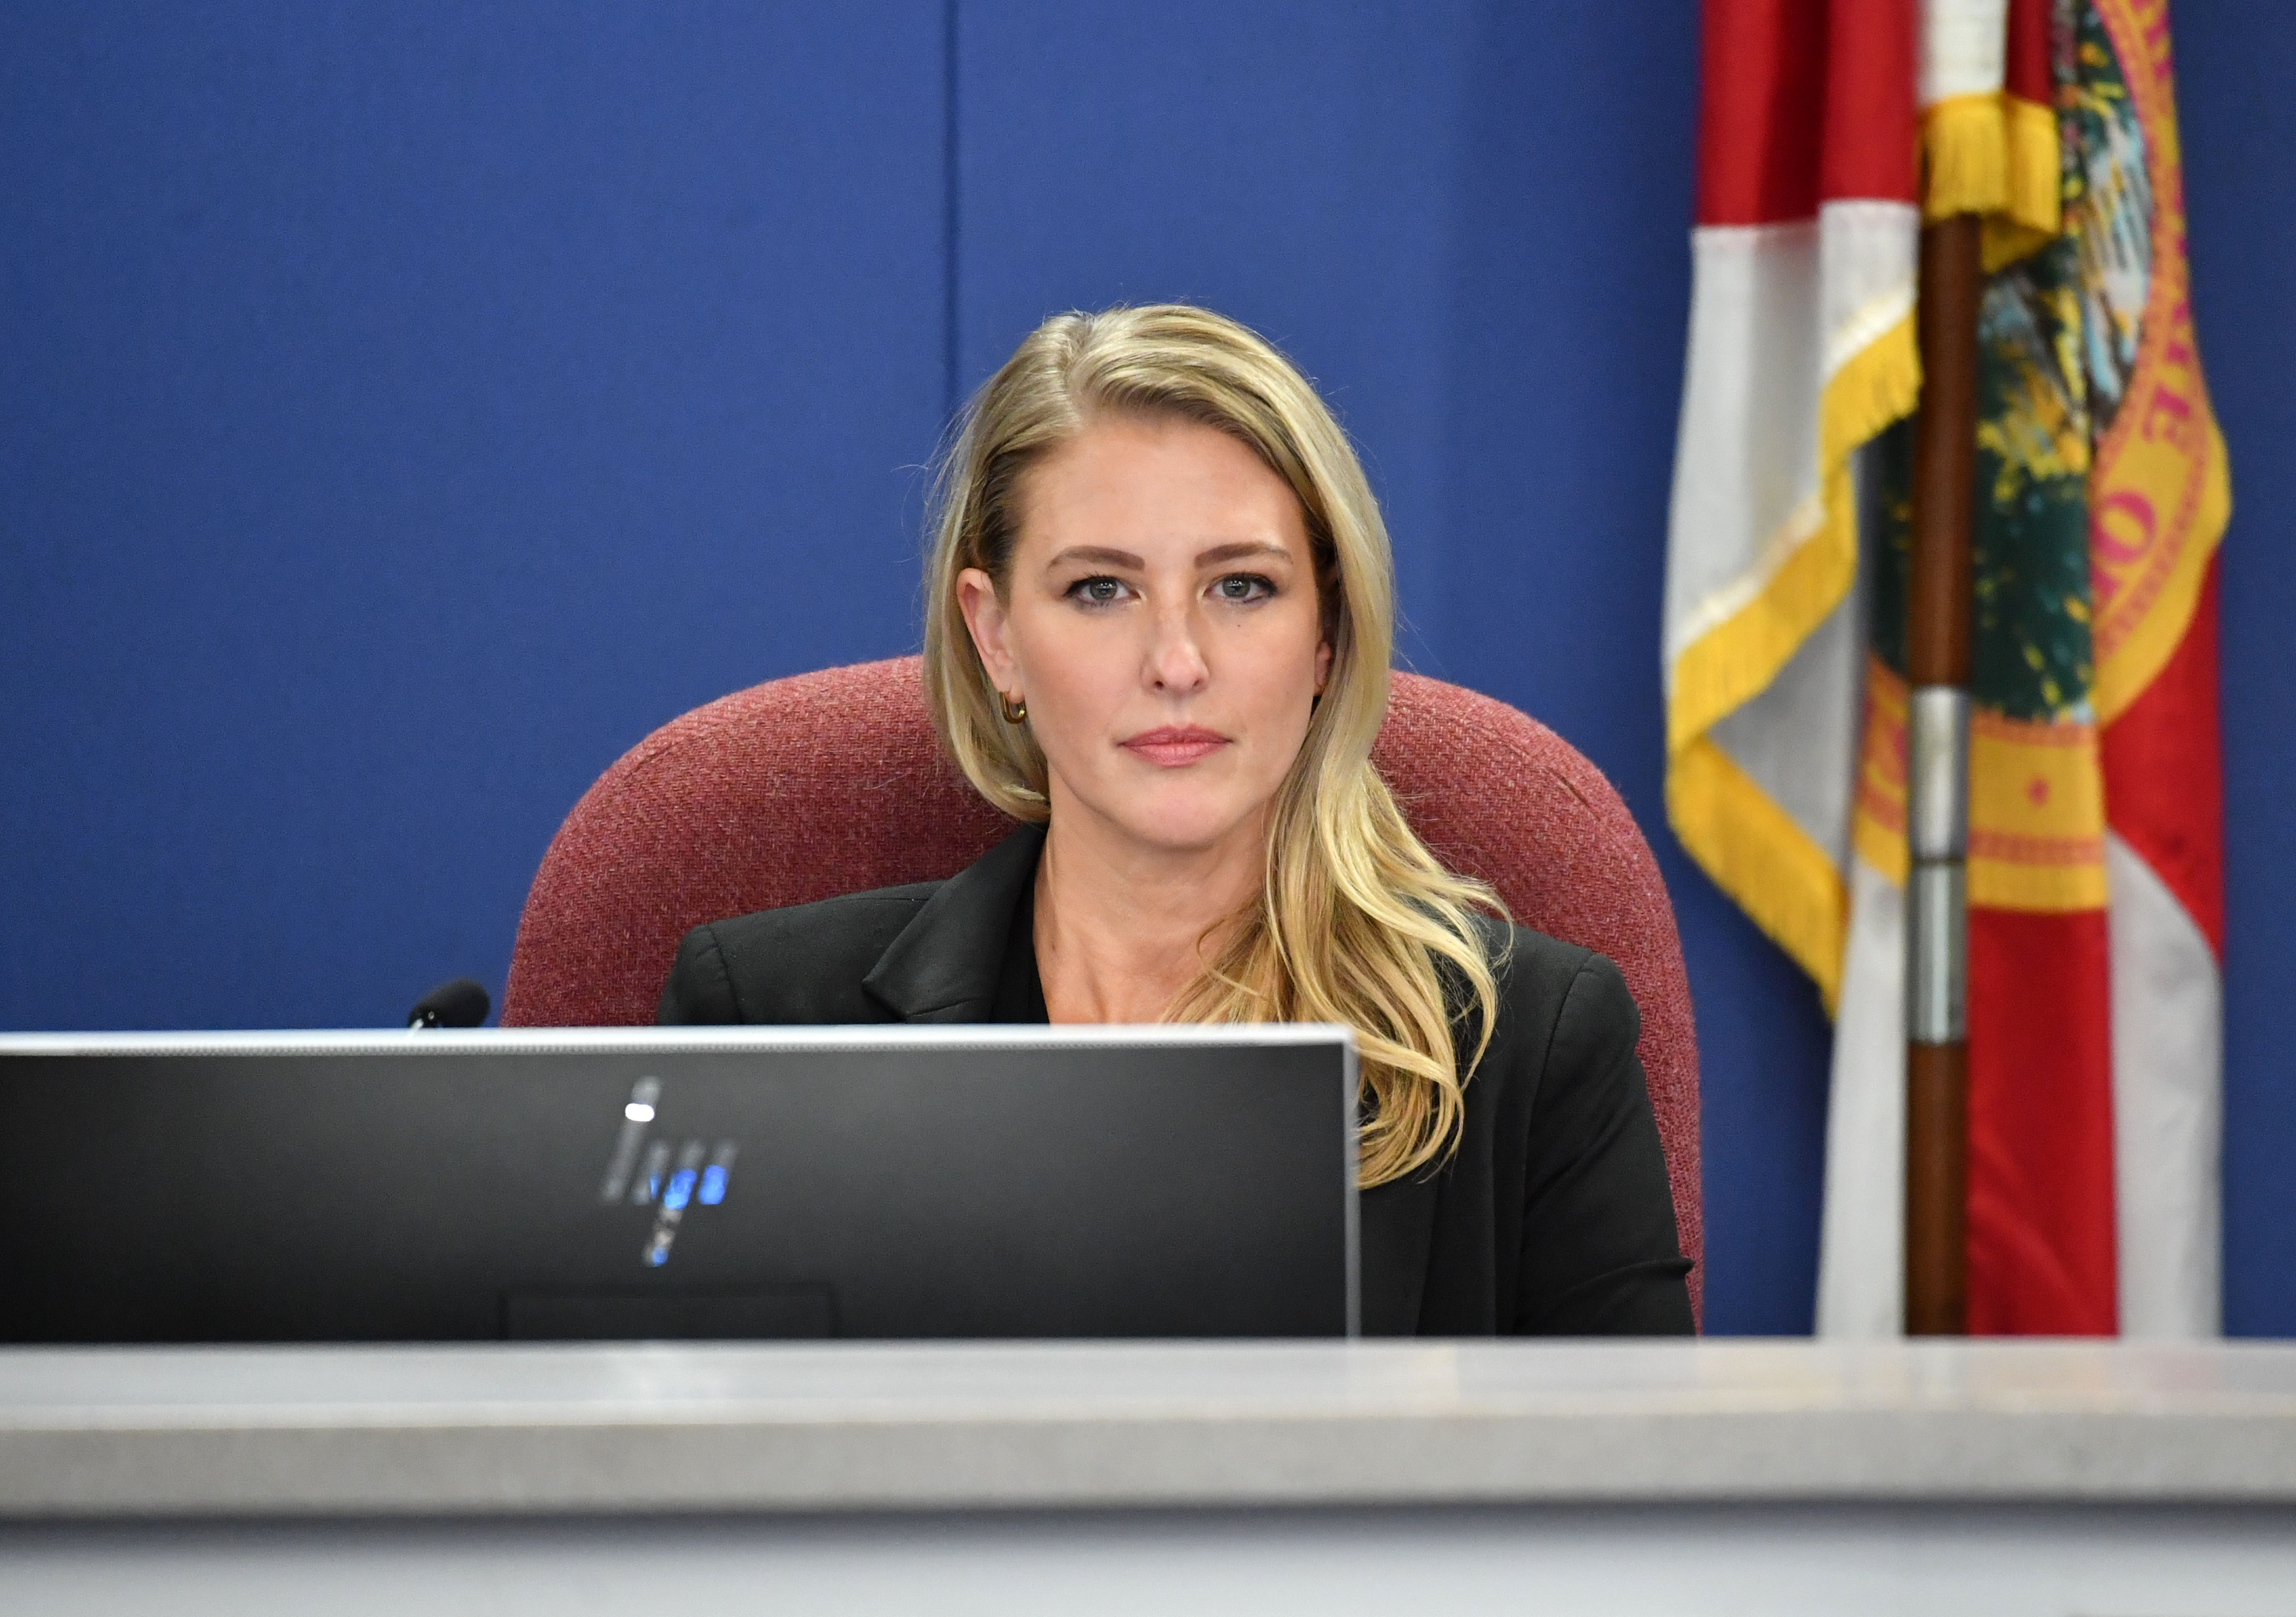 Sarasota Police interview of Bridget Ziegler from Christian Ziegler rape investigation